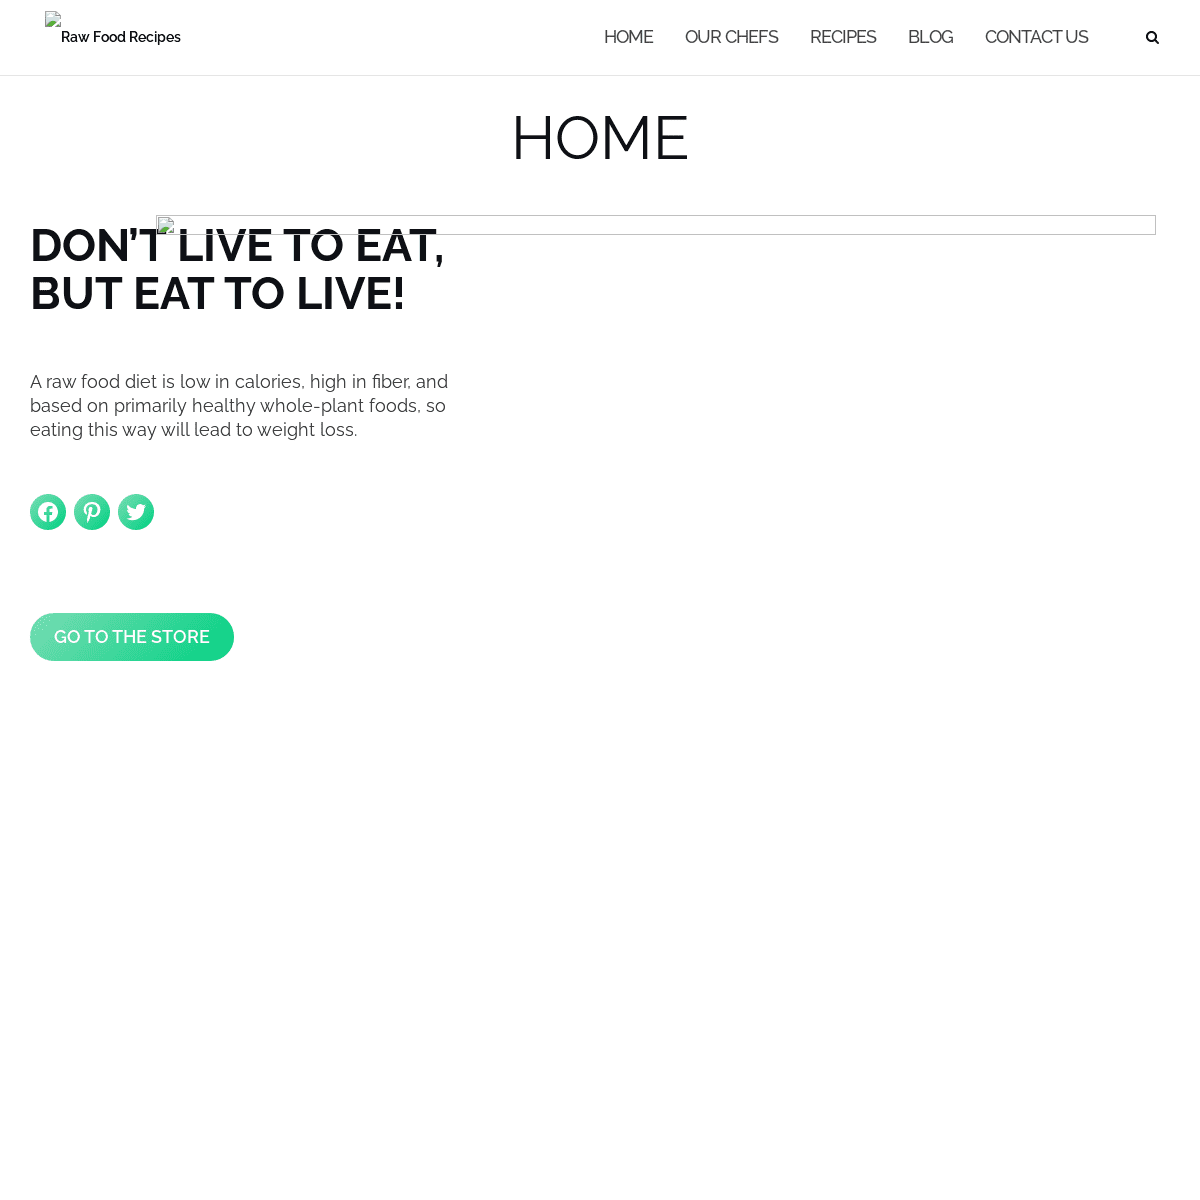 A complete backup of https://rawfoodrecipes.com